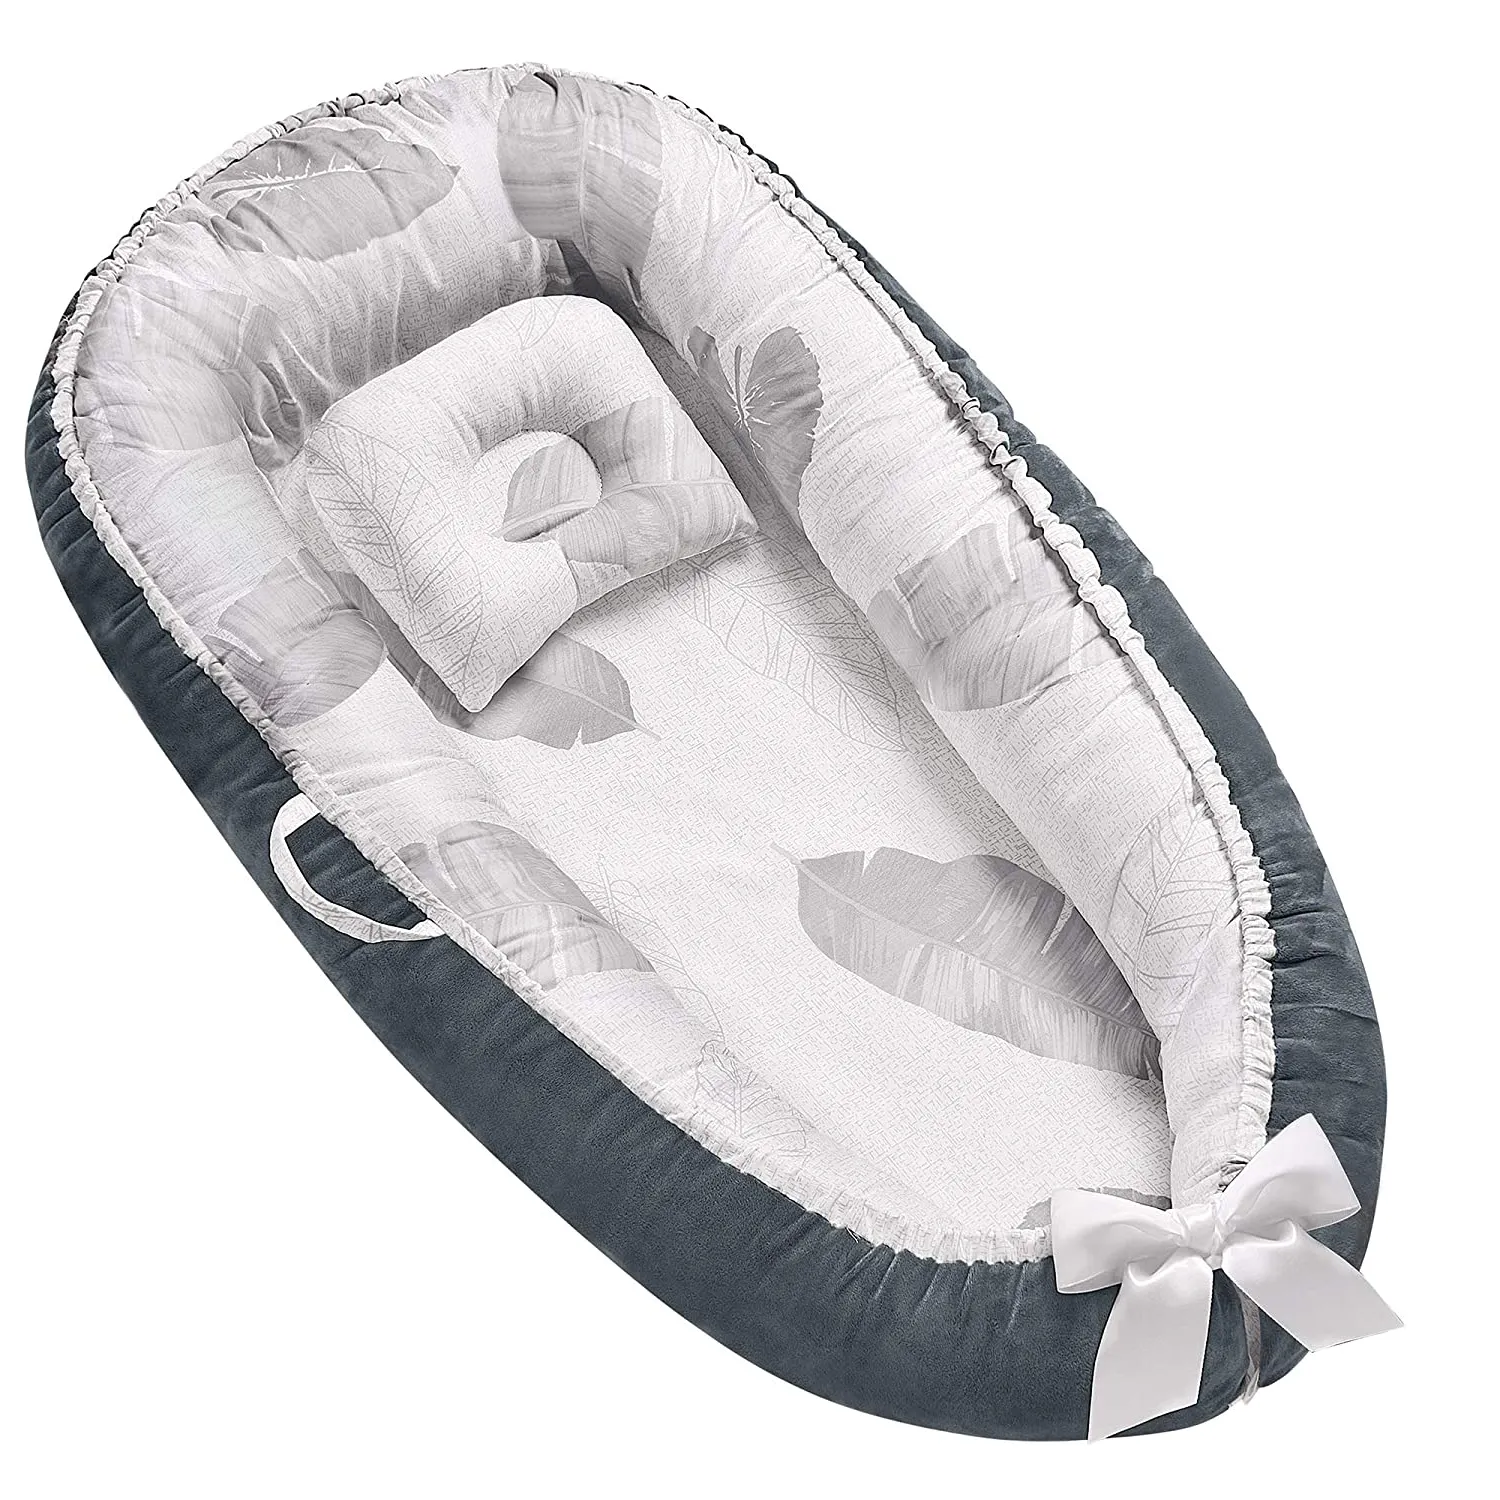 CPC ASTM CPISA מוסמך סופר רך כותנה מרופד תינוק כסא, מתקפל מיטת תינוק עם מילוי, נייד תינוק קן מיטה